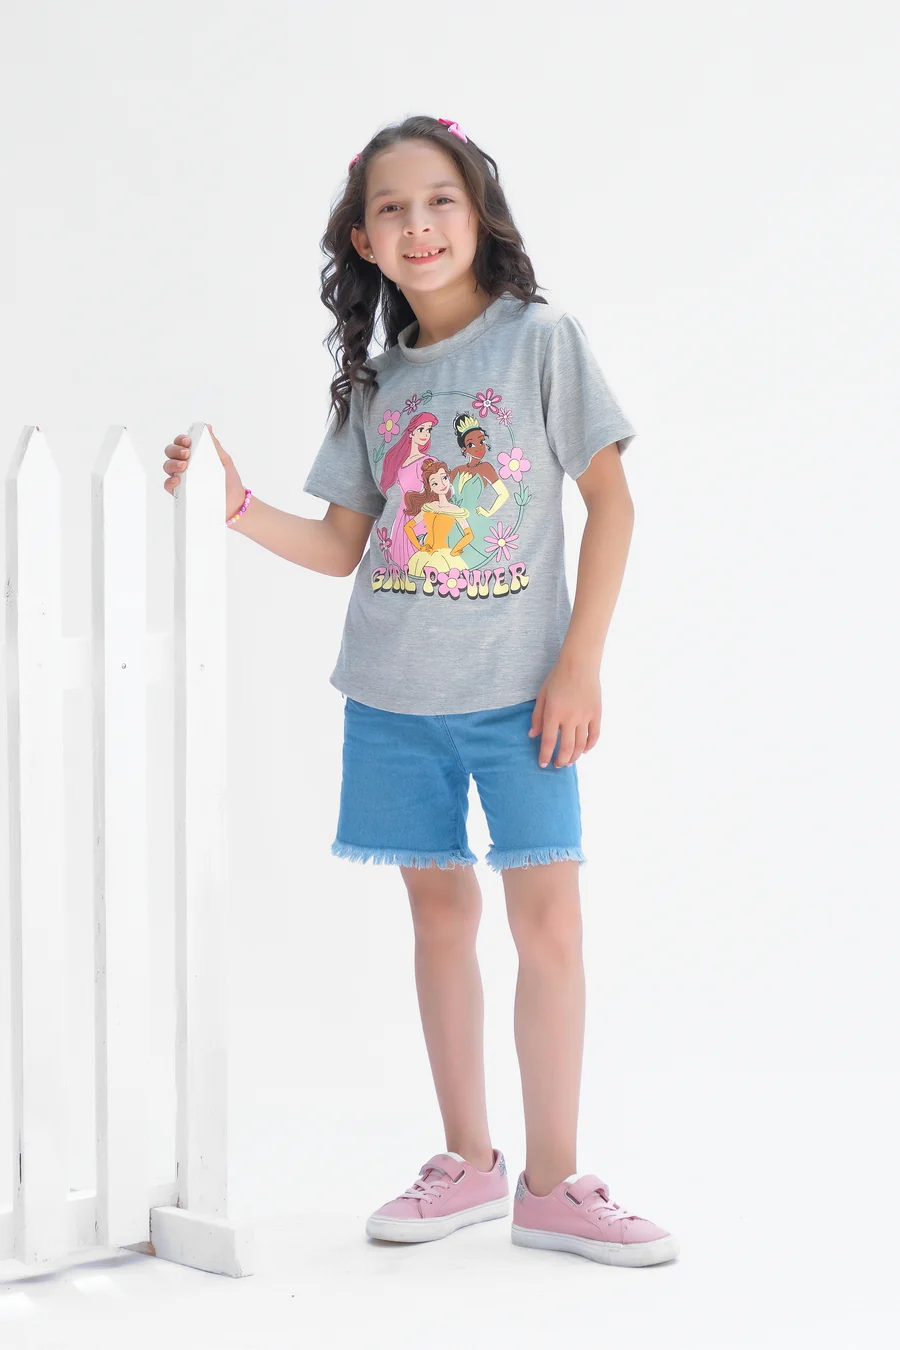 Disney Princess Girl Power Half Sleeves T-Shirts For Kids - Grey